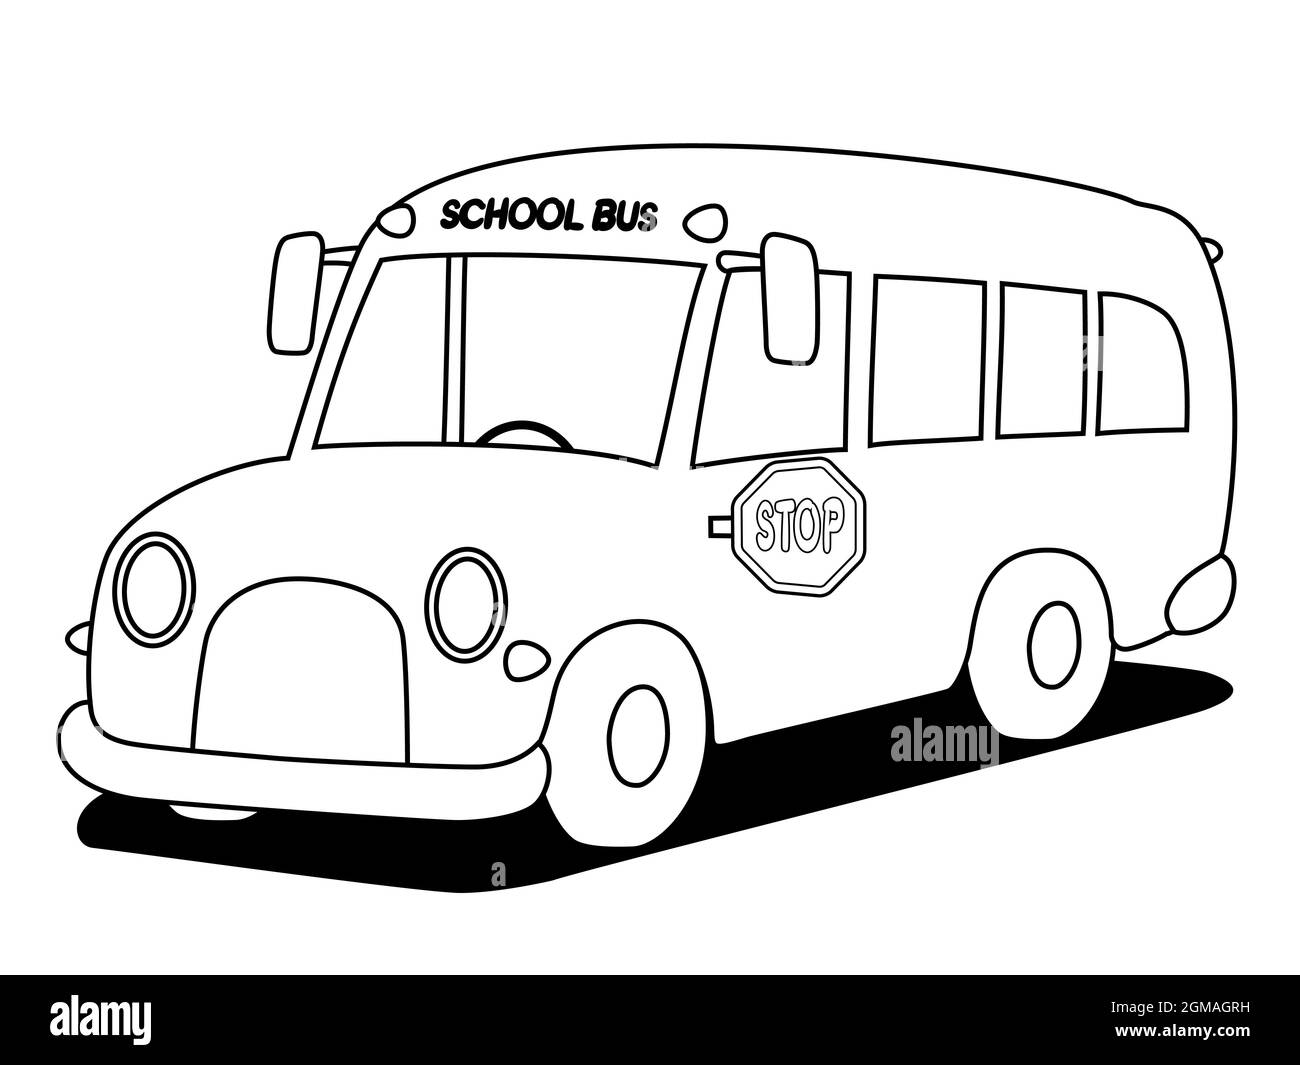 Schulbus Kinder Vektor Umriss Illustration. Student Transport Cartoon auf weiß isoliert. Stock Vektor